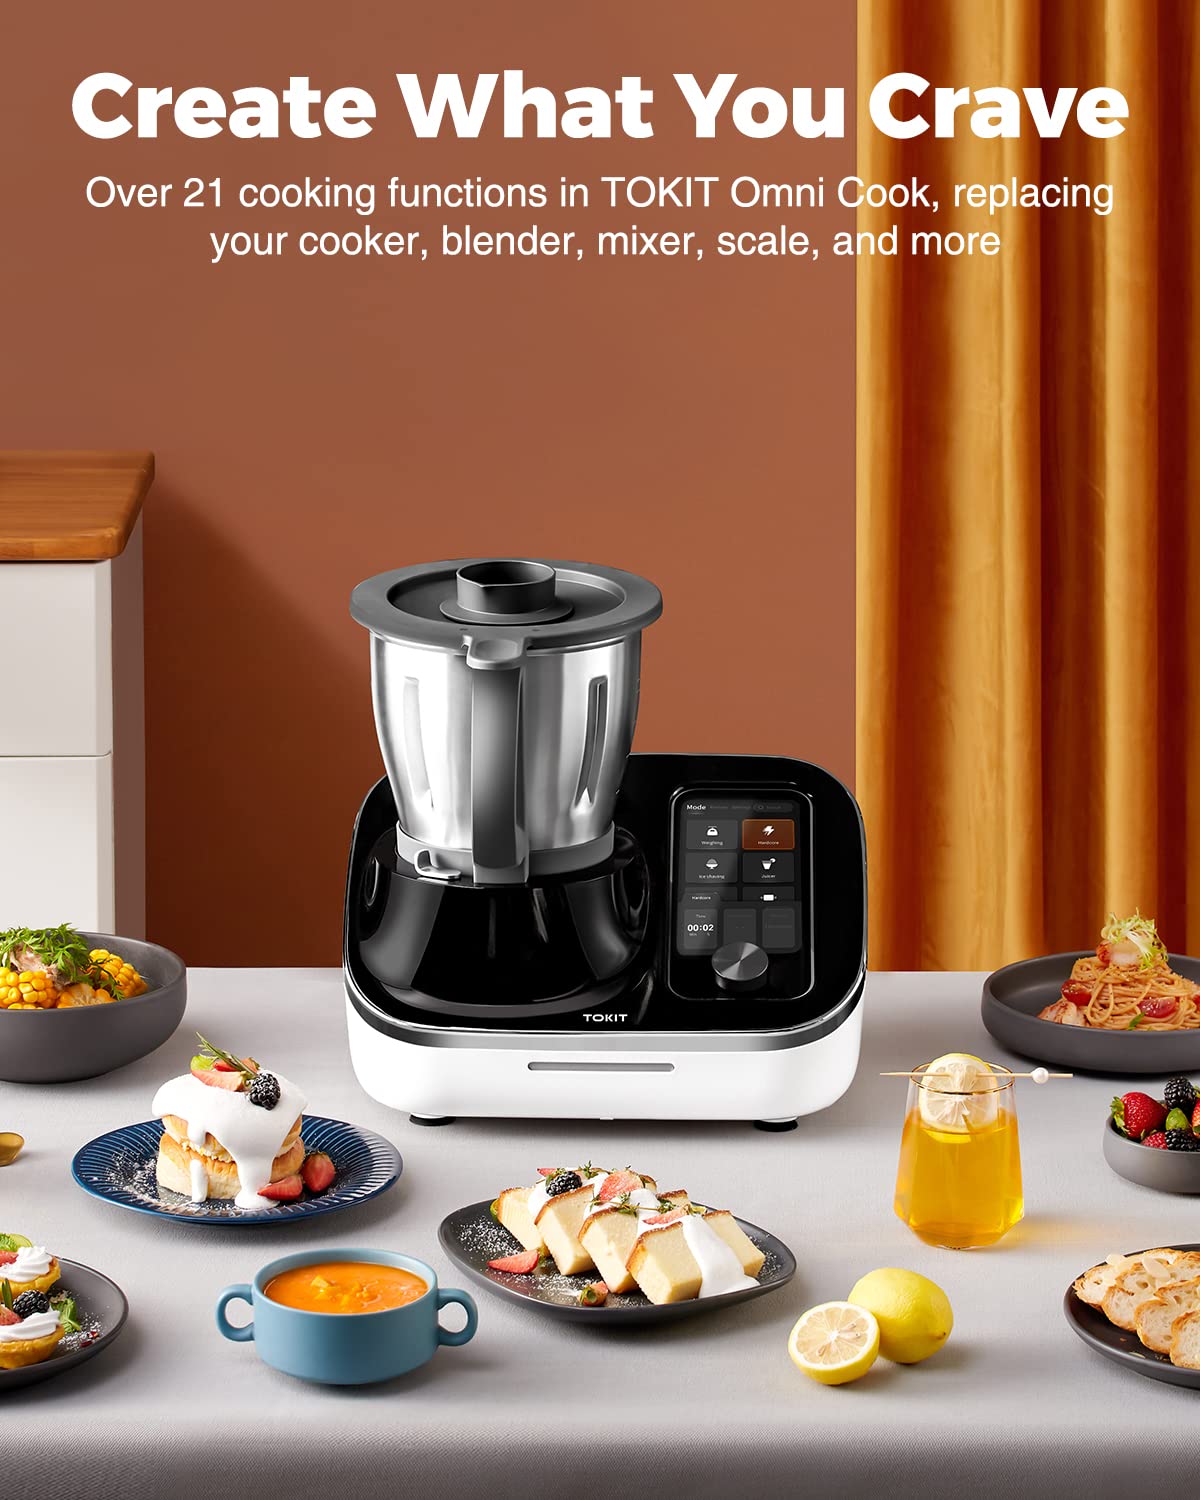 TOKIT Omni Cook Chef Robot, Smart Cooking Machine - Stand Mixer, Slow Cooker, Chopper, Juicer, Blender, Sous-Vide, Knead, Sauté, Yogurt Maker, Weigh, 10 Speed, 3000+ Free Recipes, 95°F-356℉, 2.2QT